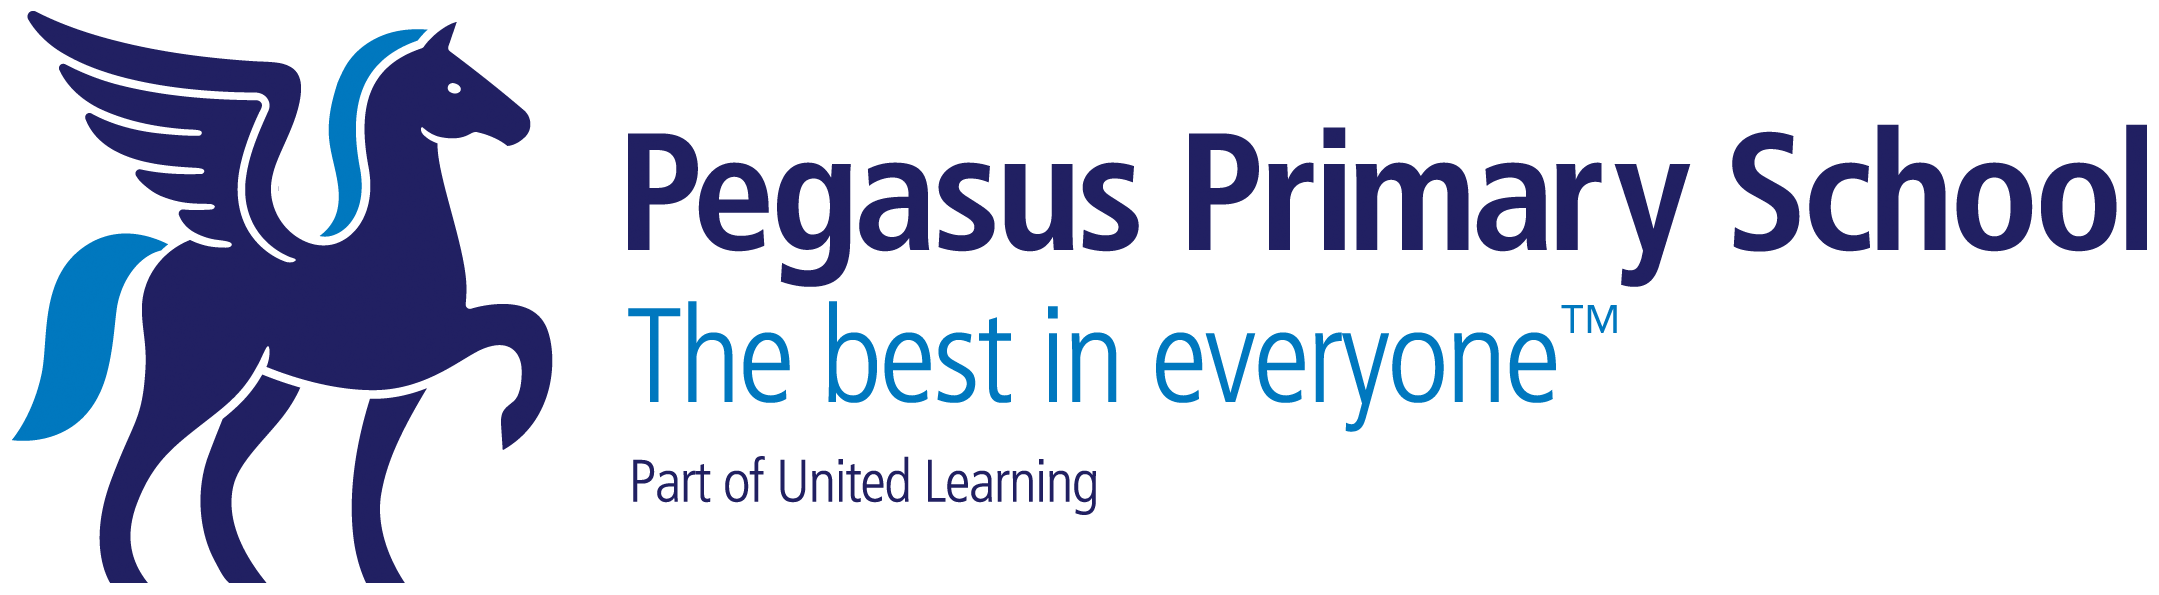 Pegasus Primary School school logo